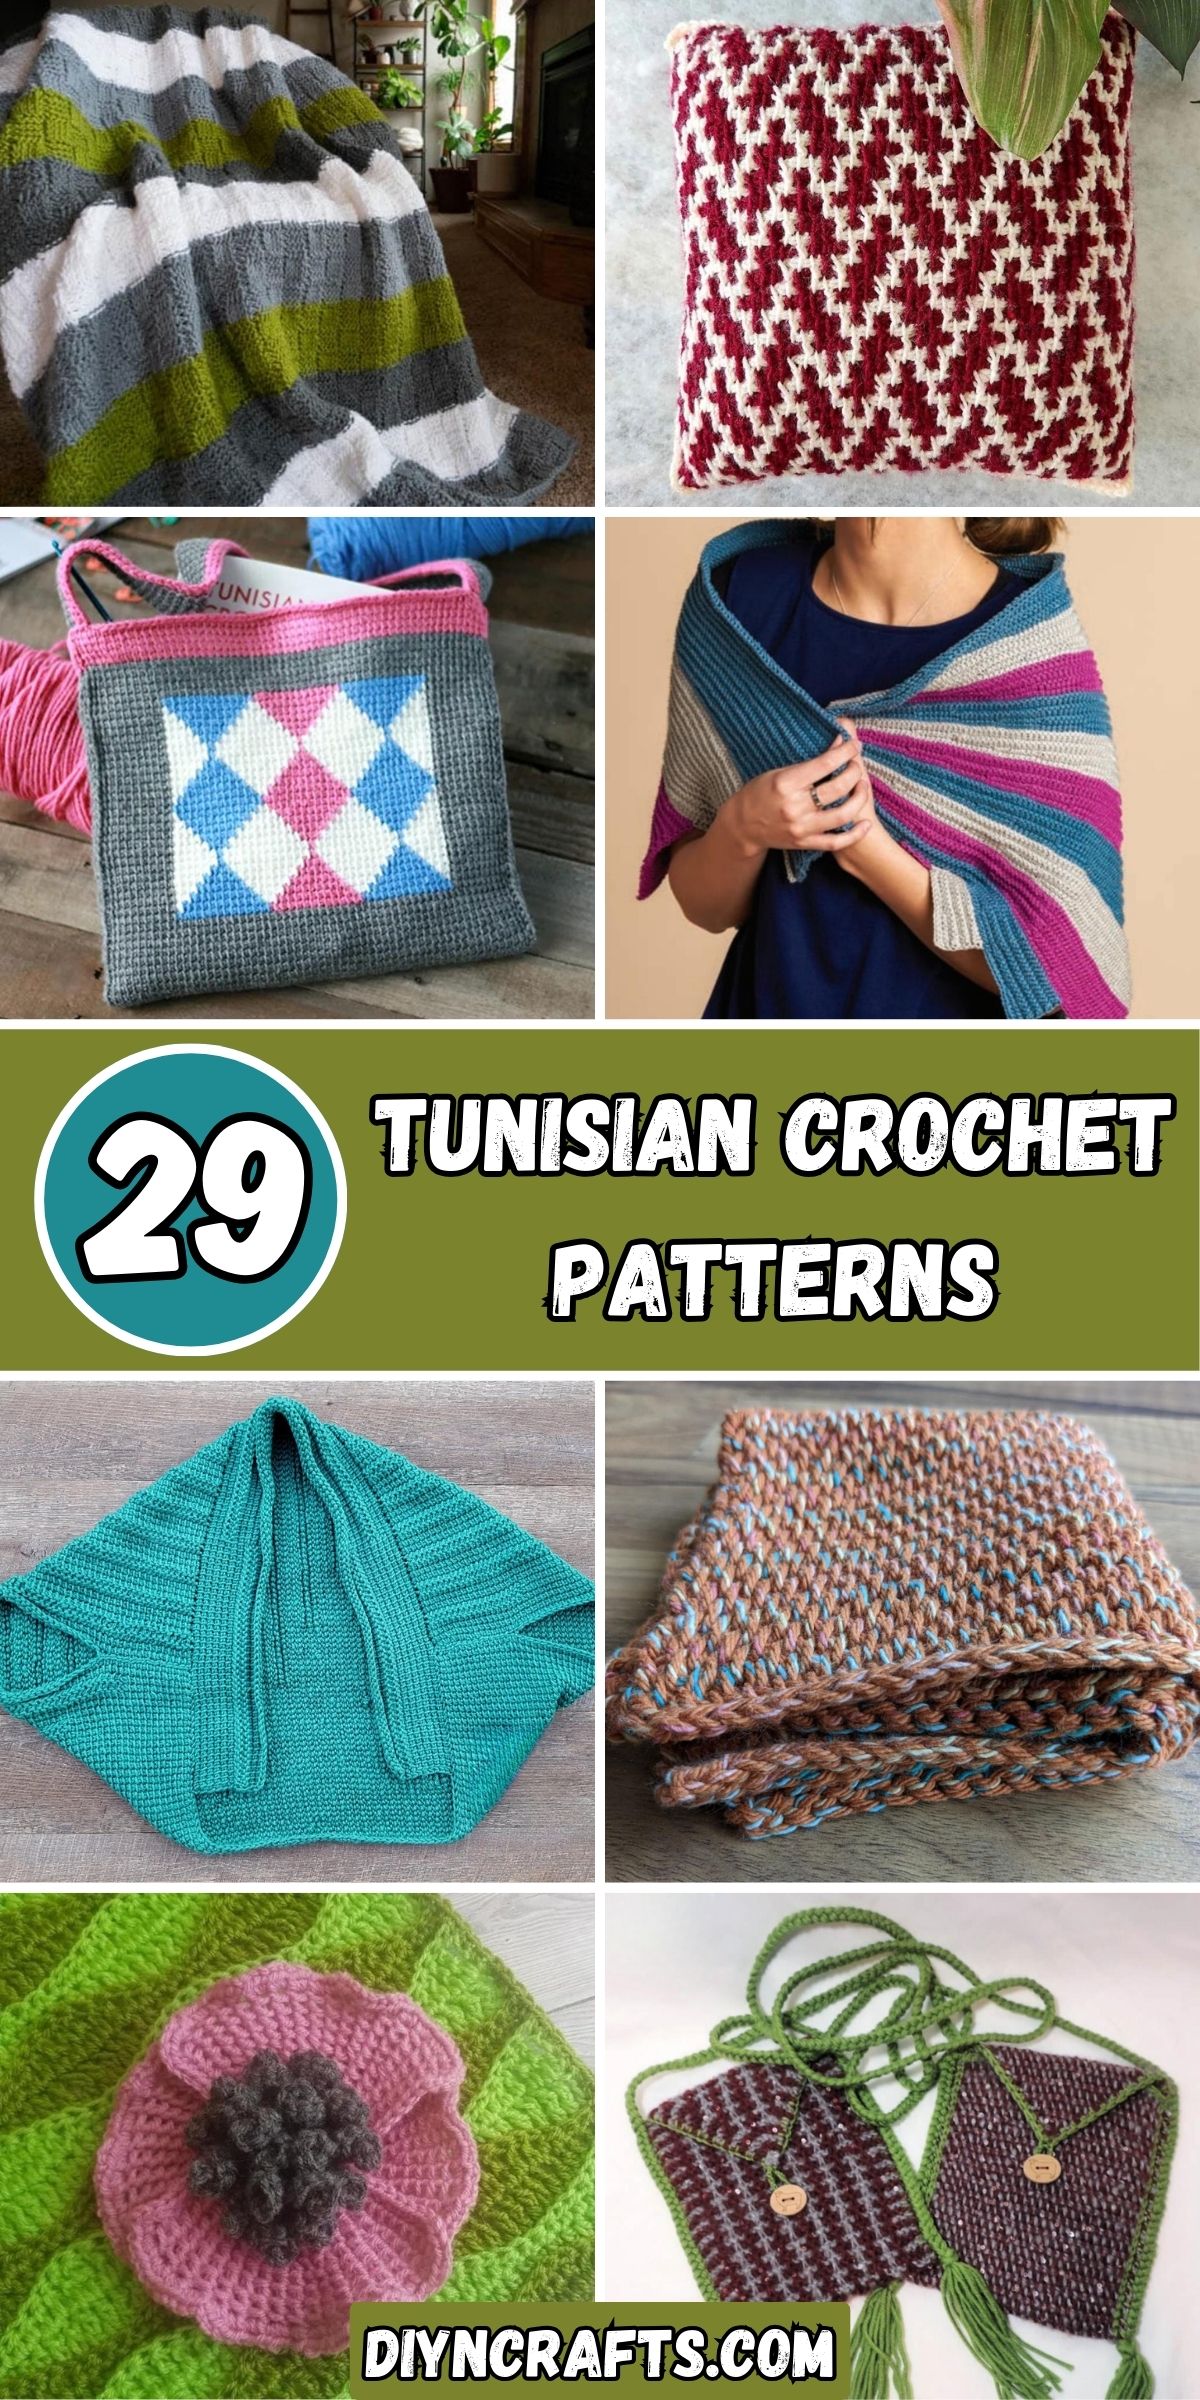 29 Tunisian Crochet Patterns collage.